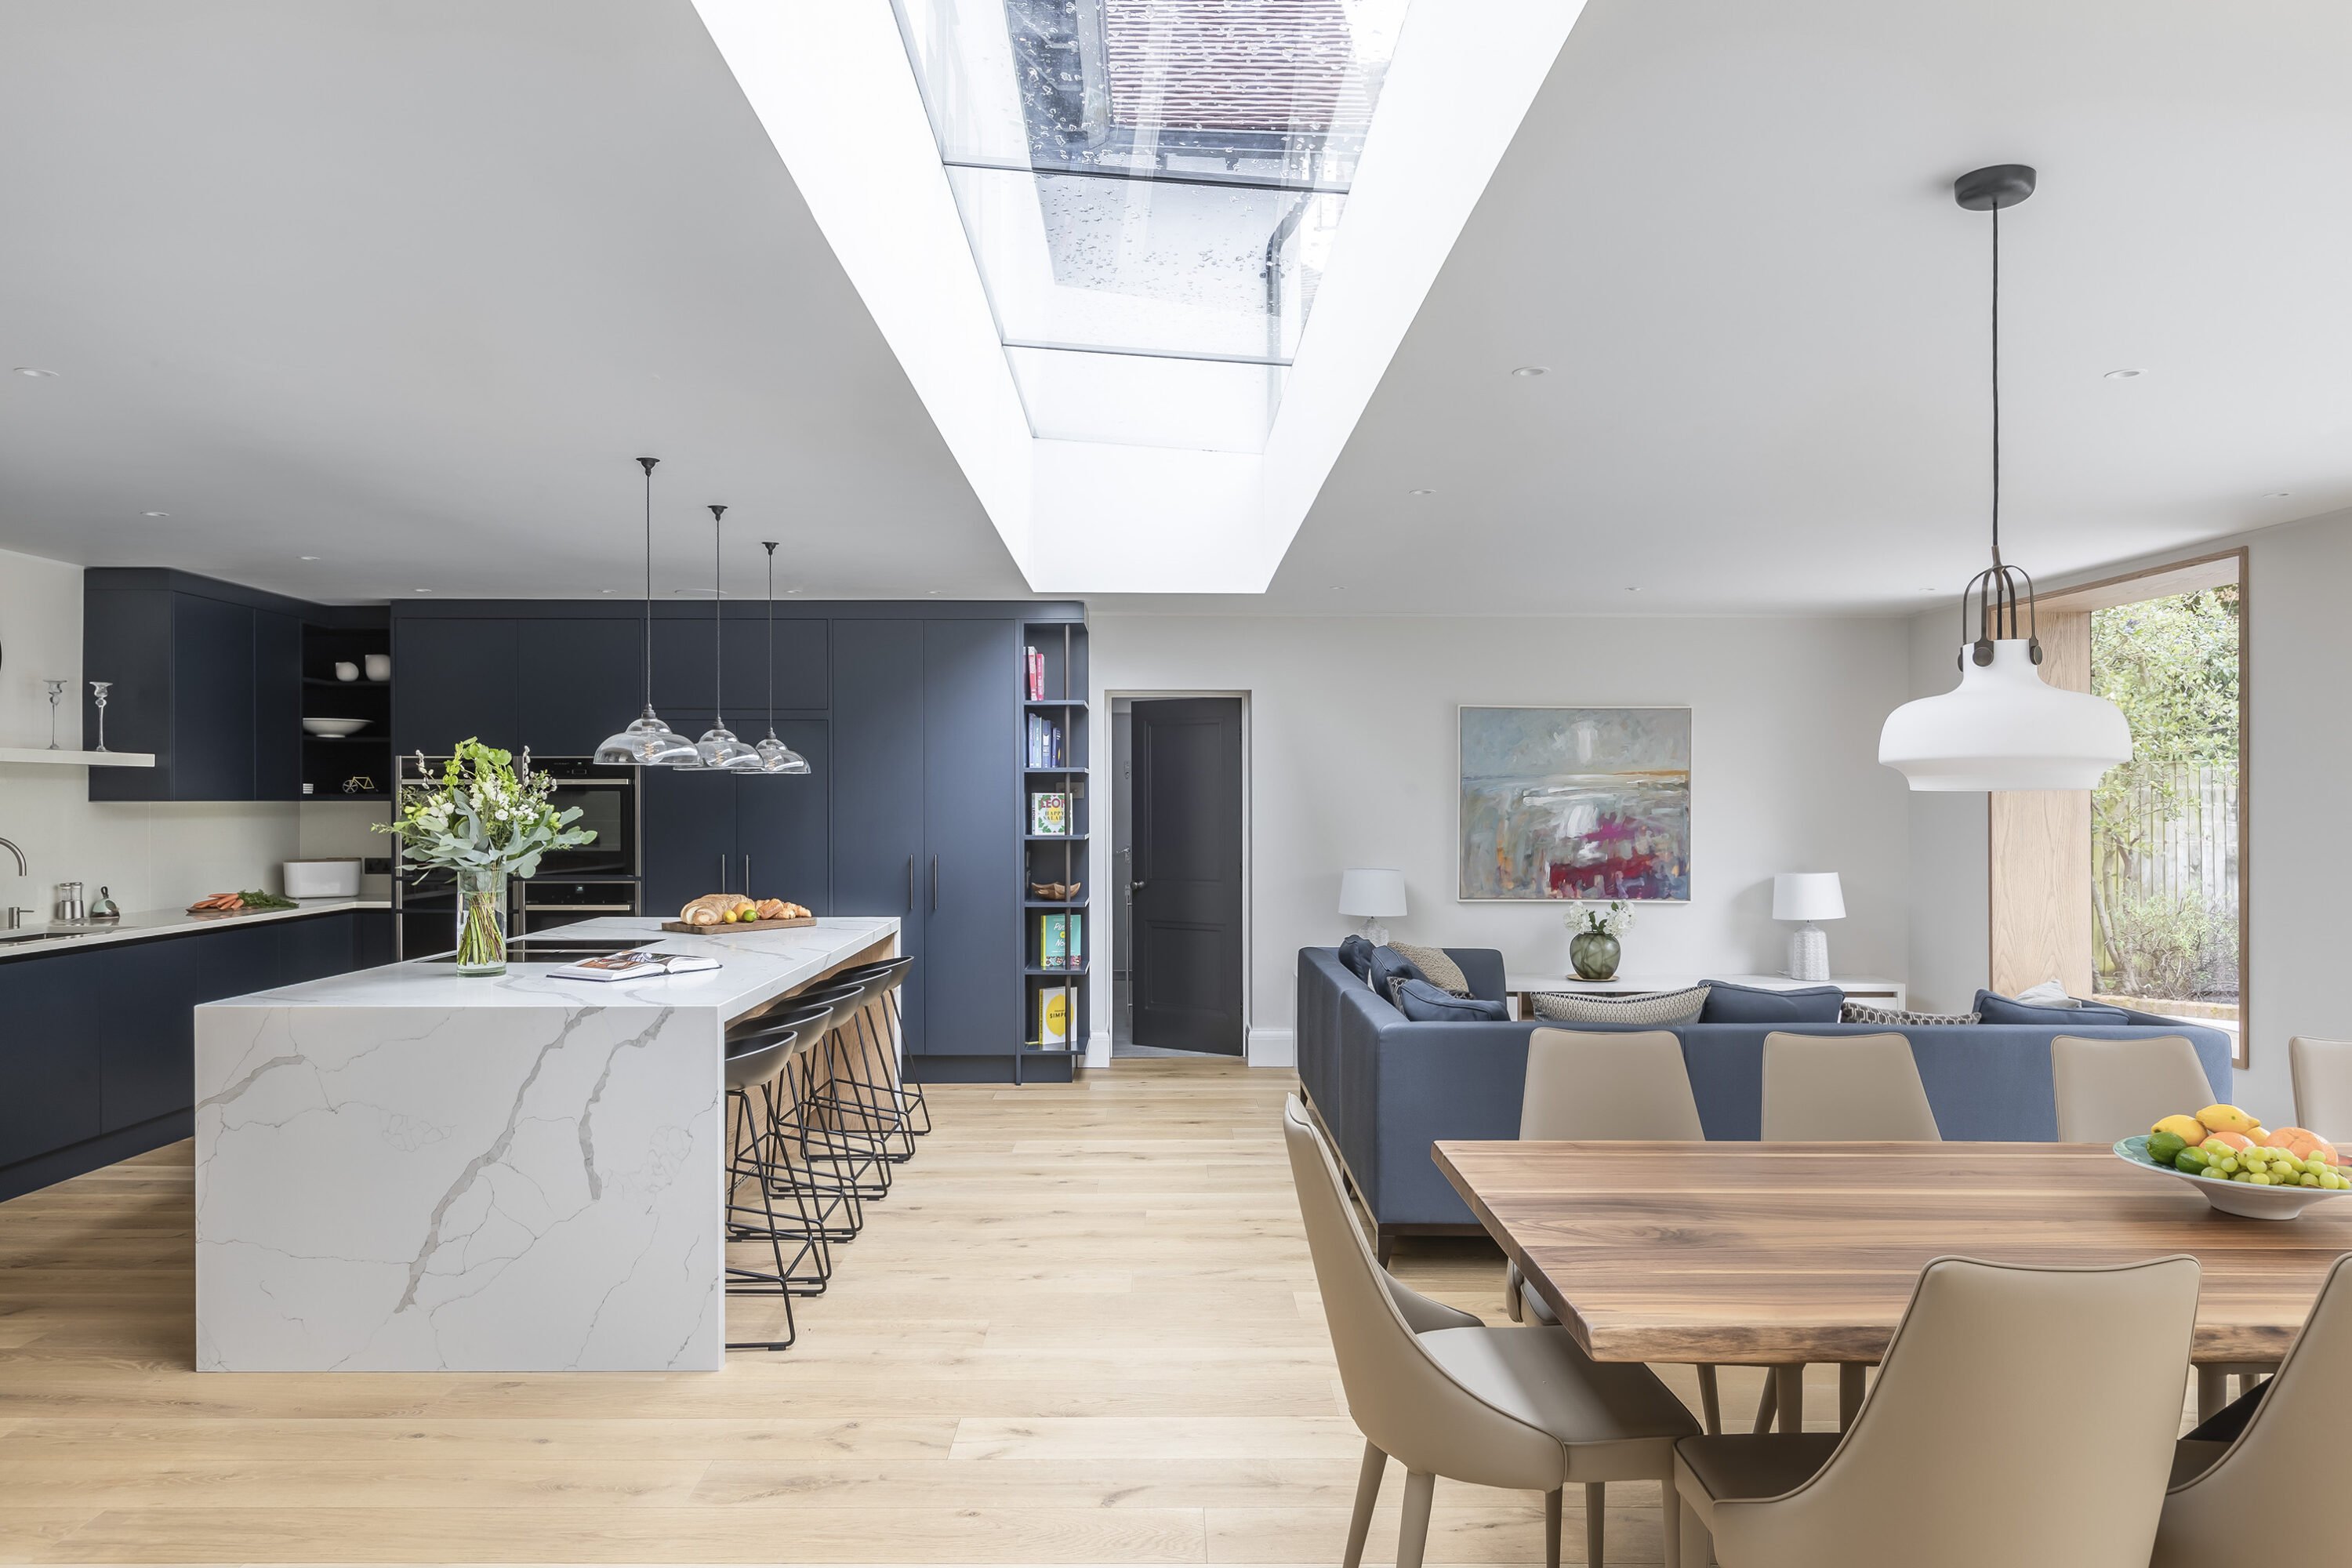 Contemporary, Light-Filled Interior Design | HollandGreen